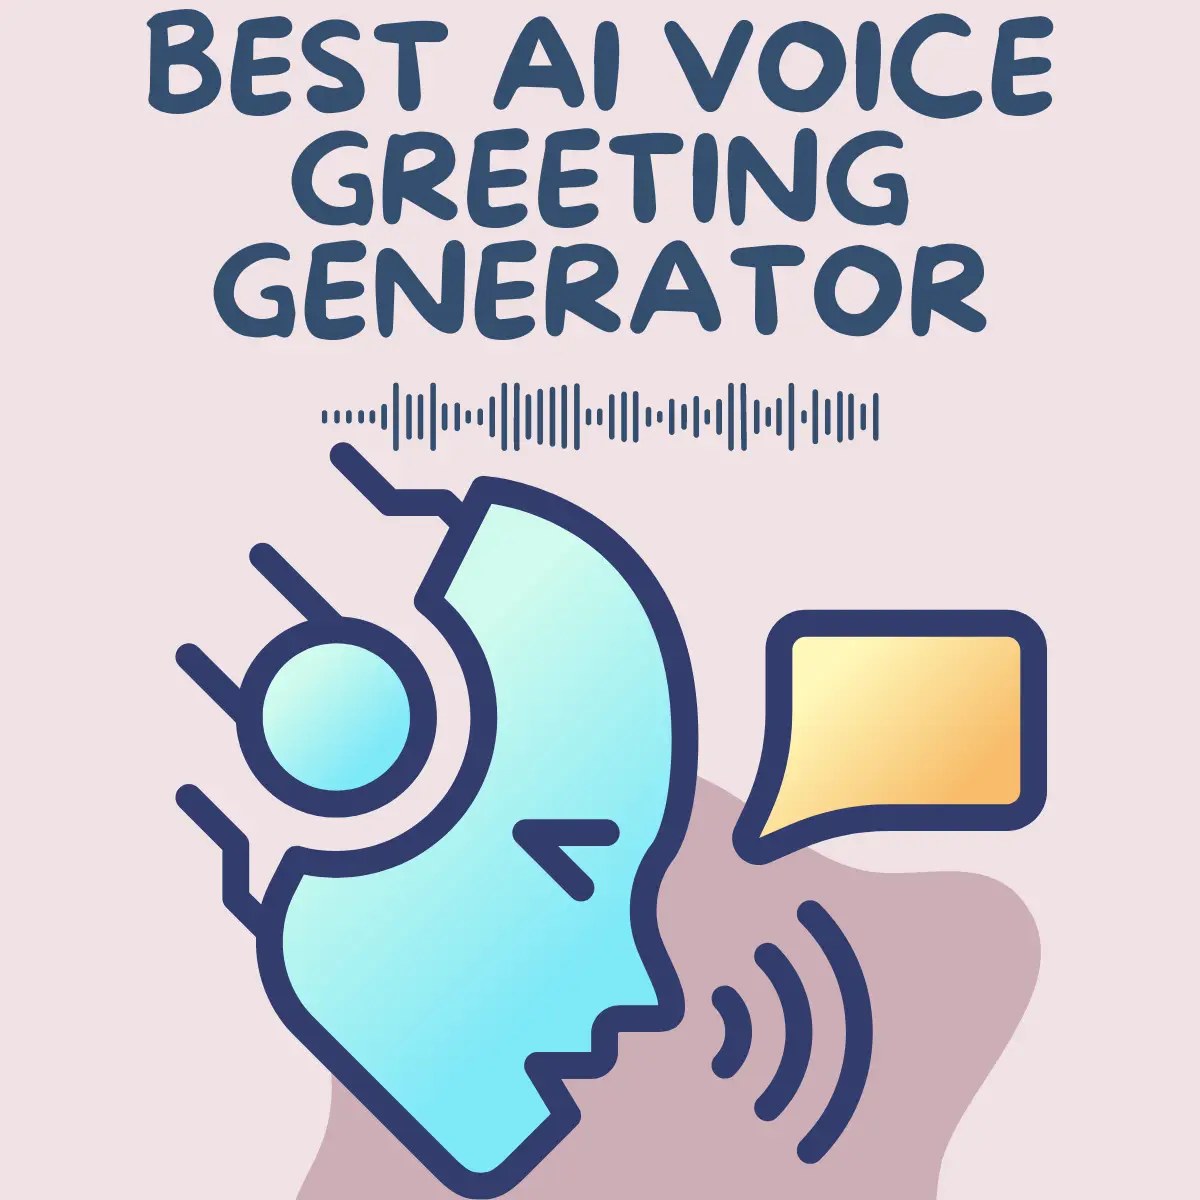 Voice greeting generator